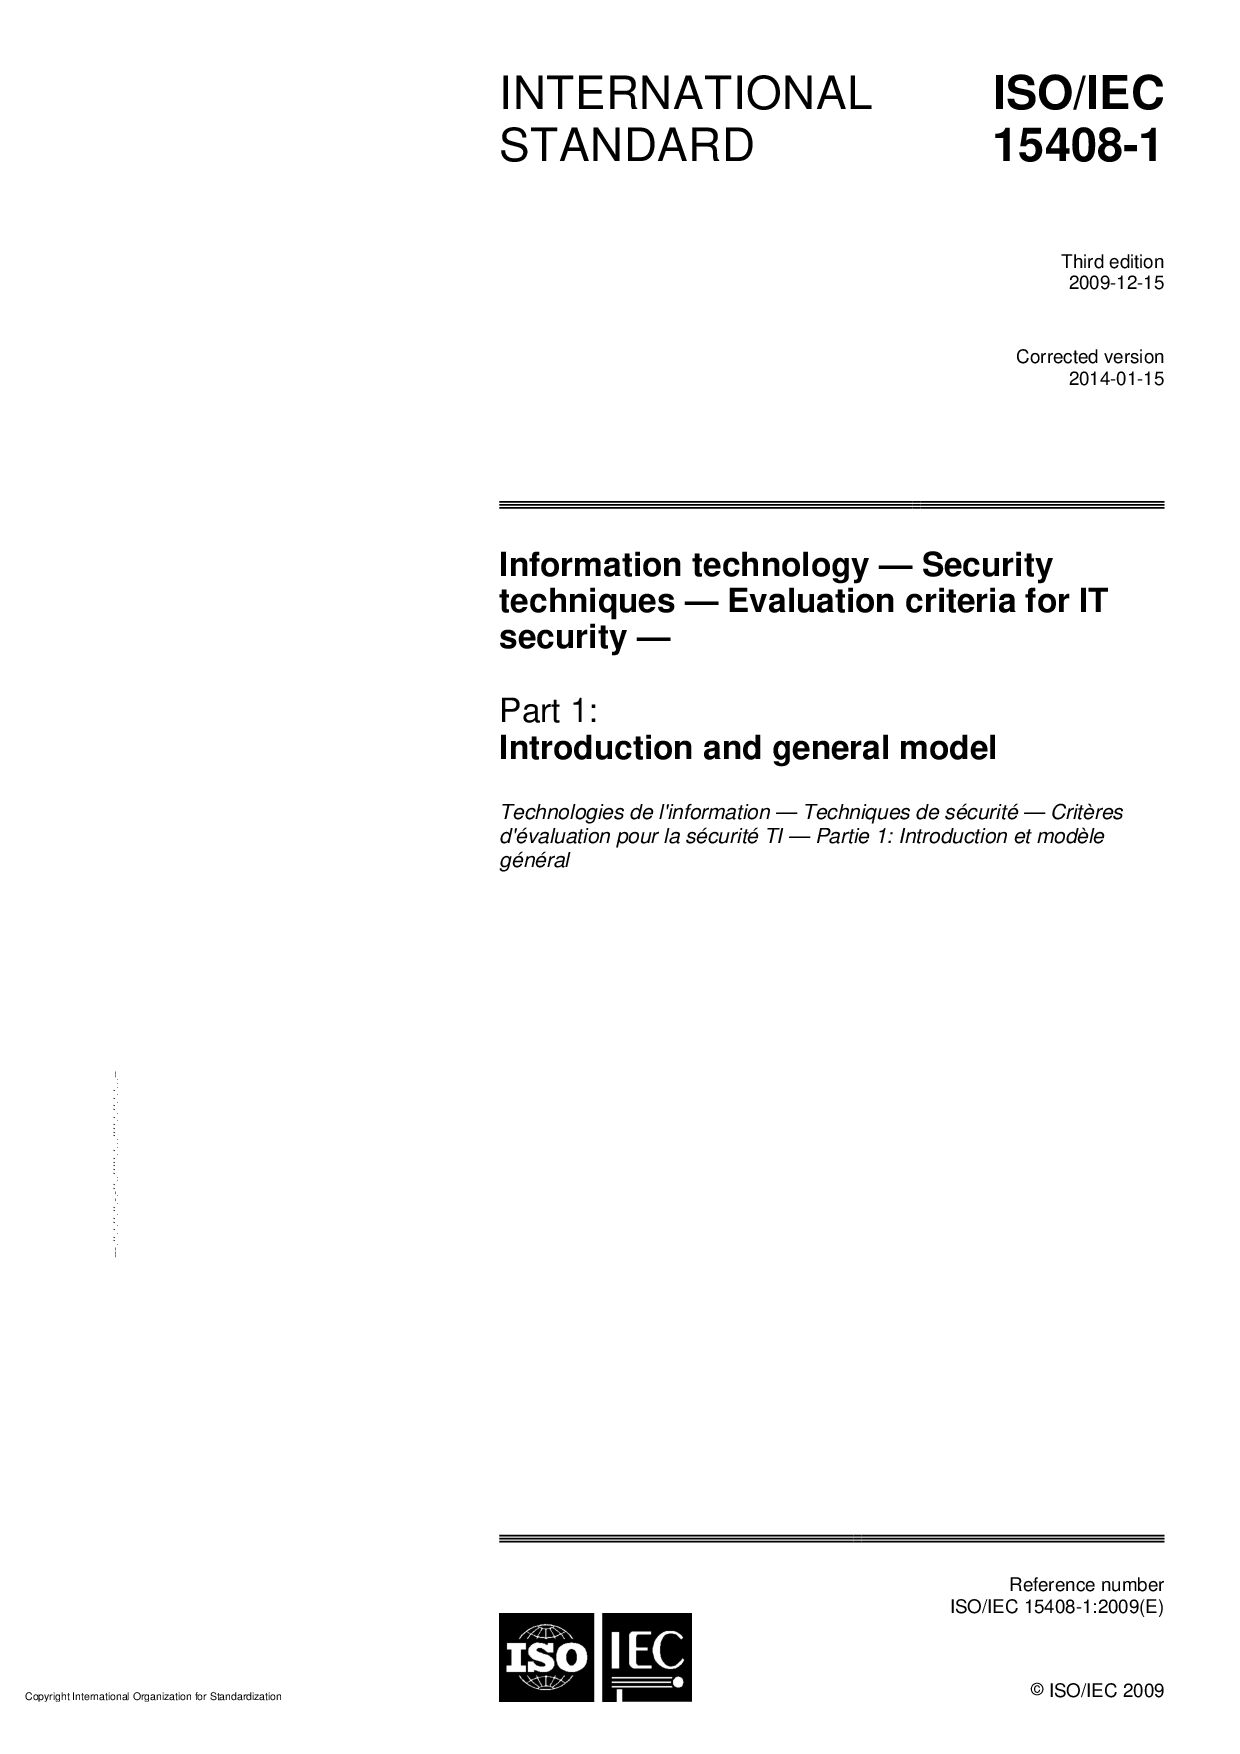 ISO/IEC 15408-1:2009